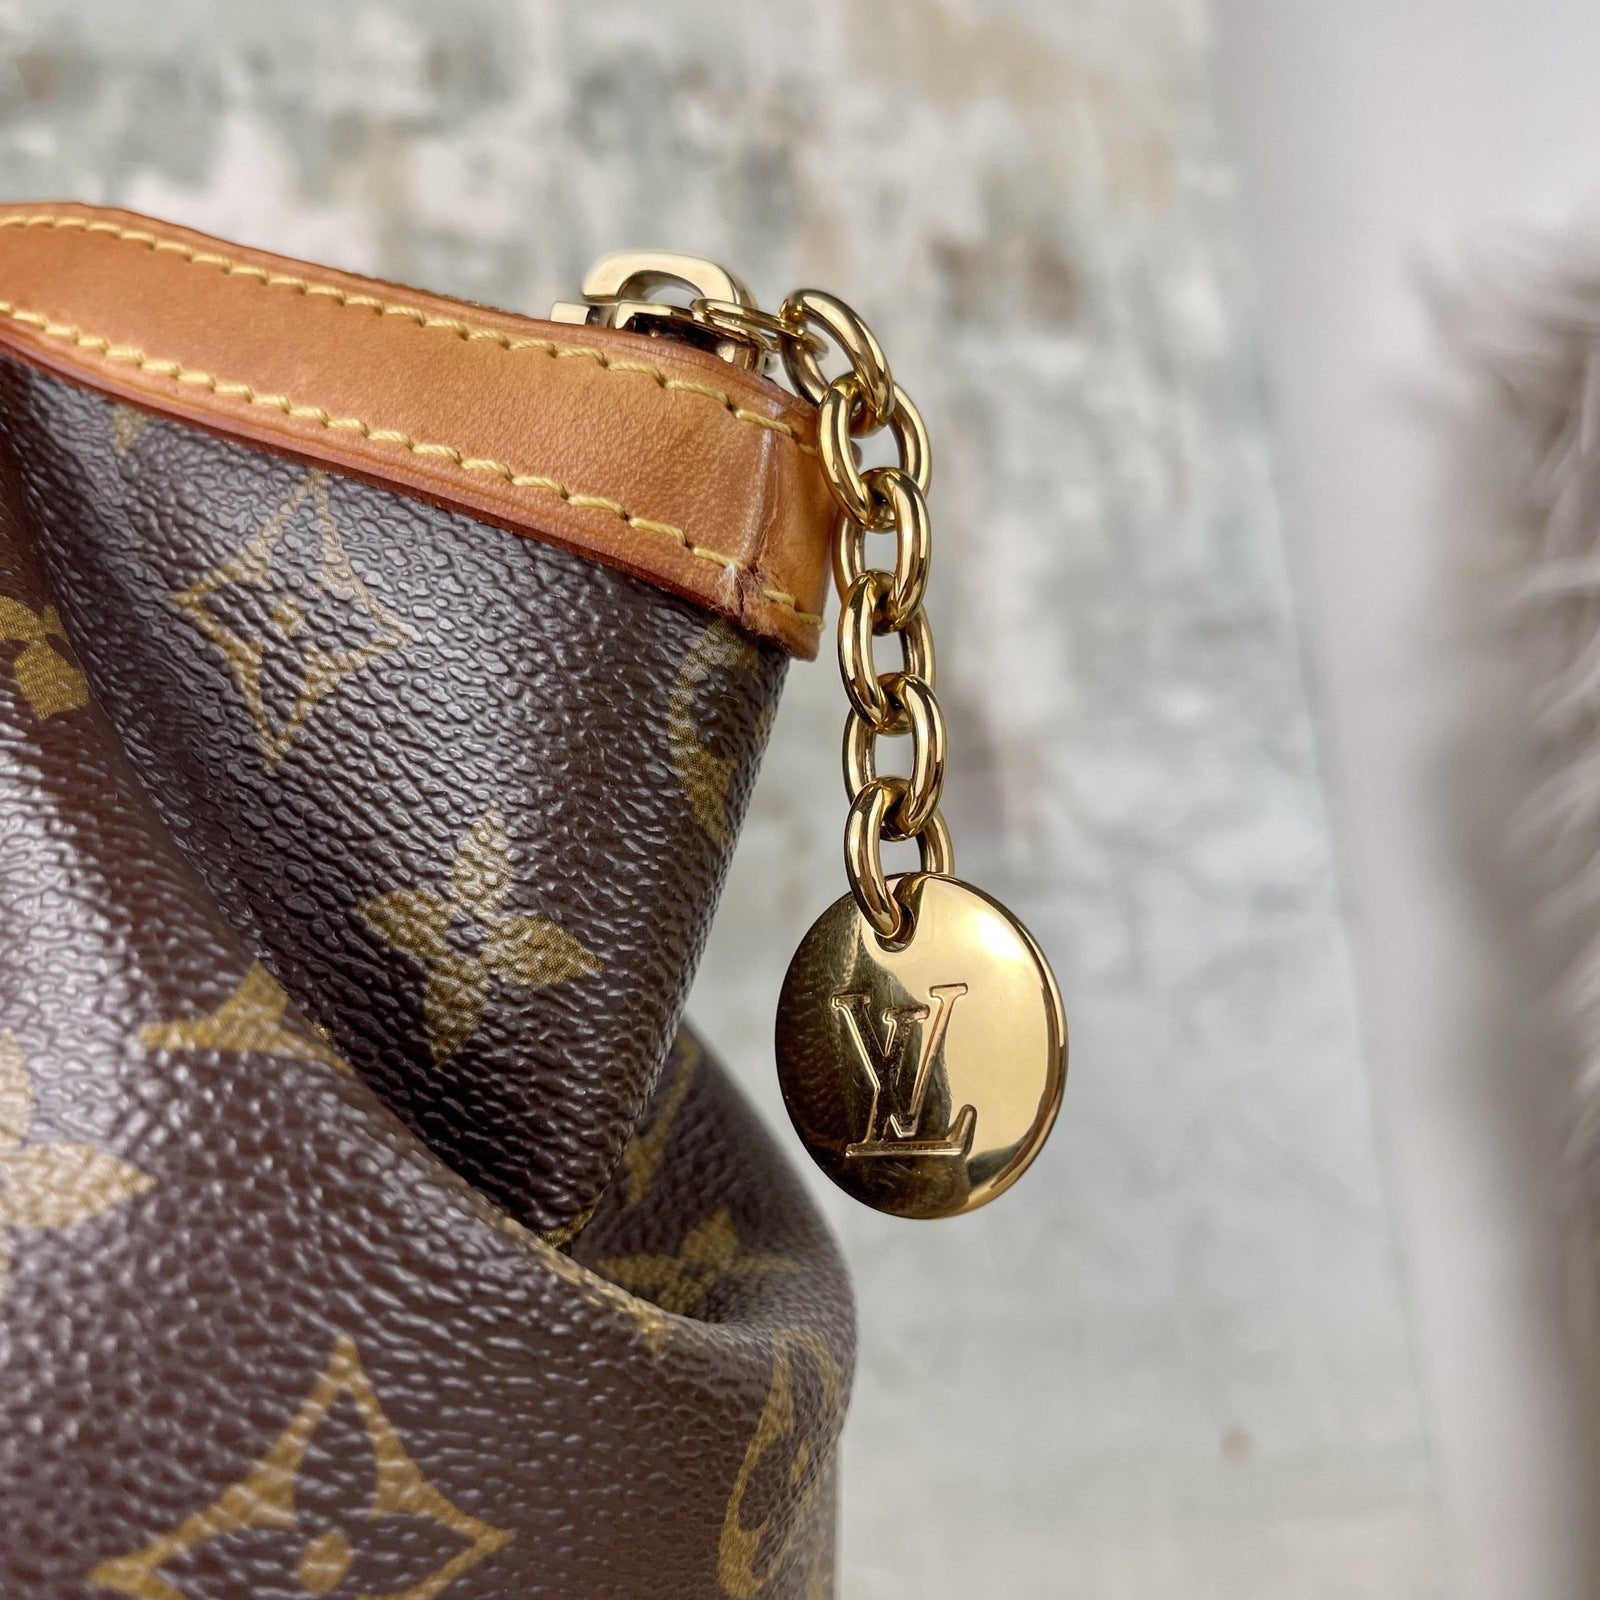 Louis Vuitton, Bags, Louis Vuitton Tivoli Pm Monogram Canvas Shoulder  Handbag